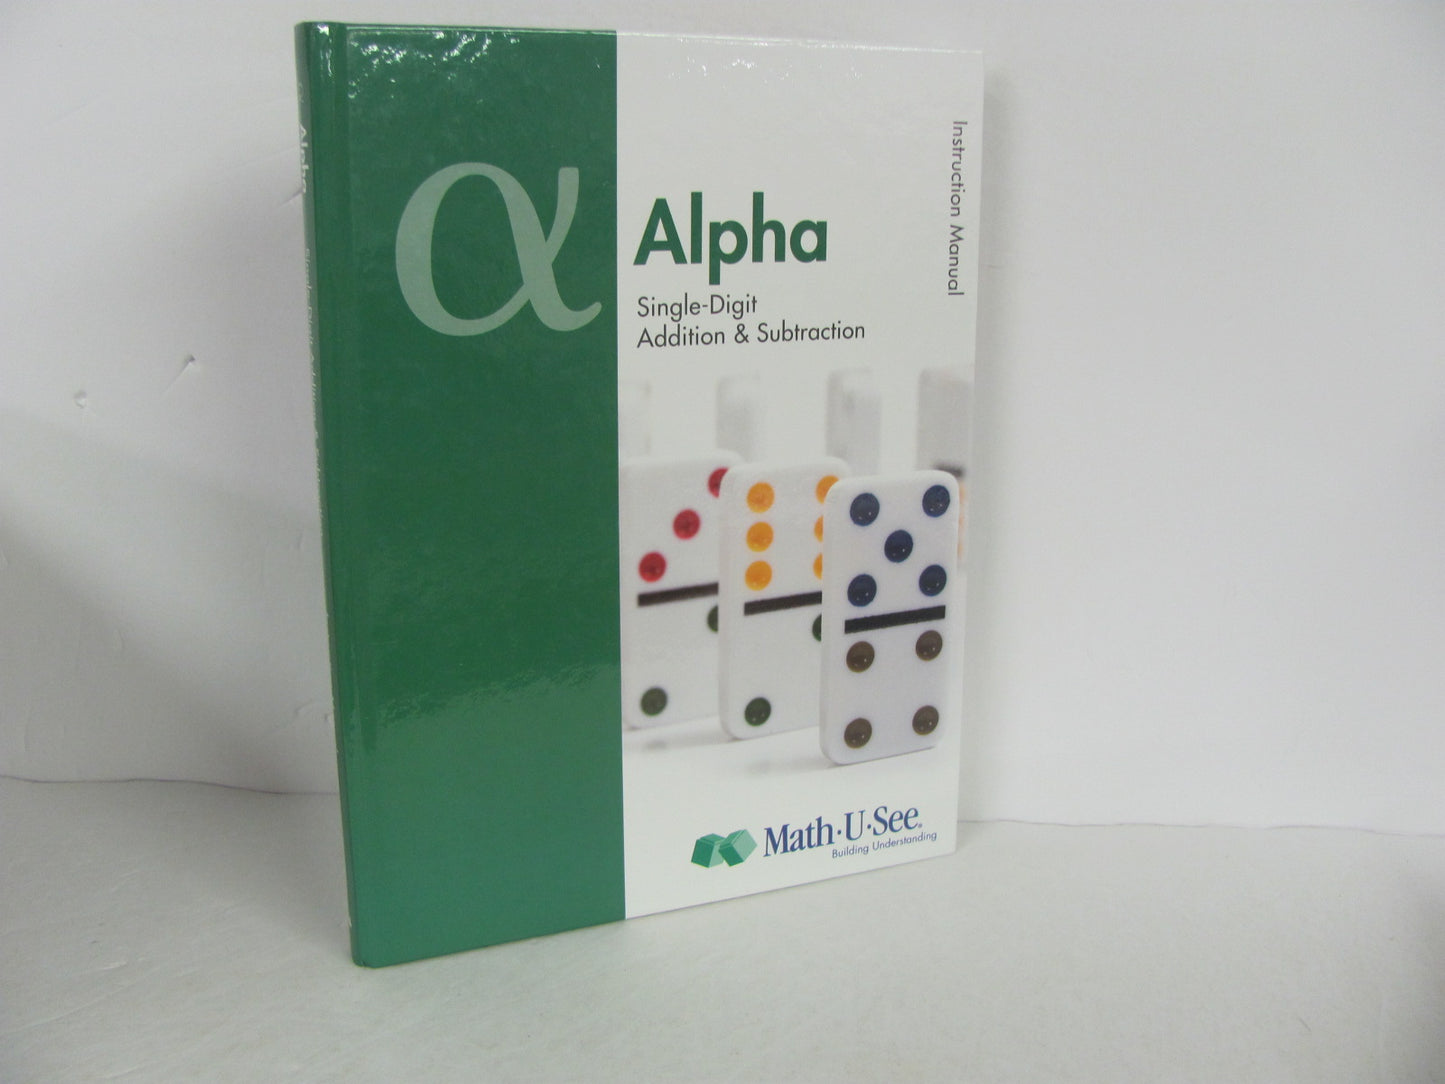 Alpha Math U See Instruction Manual  Used Demme Elementary Mathematics Textbooks